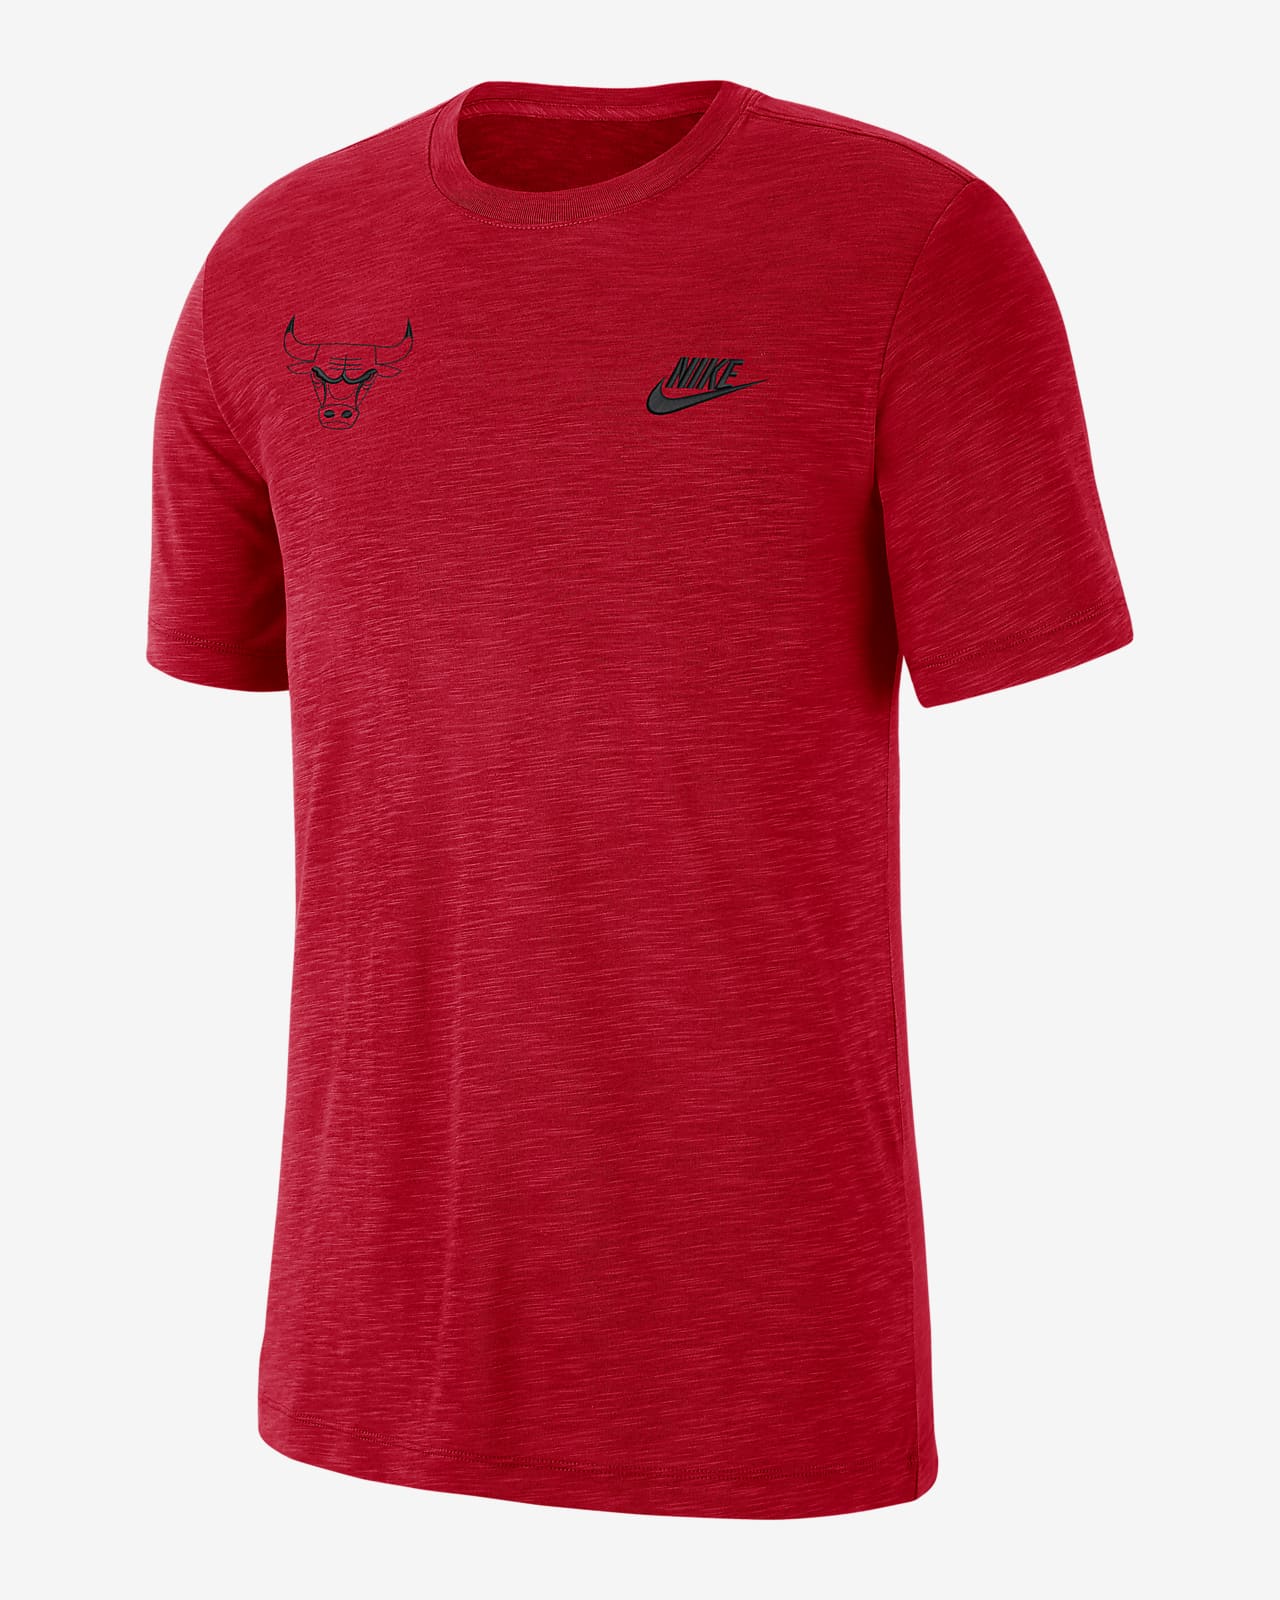 Nike Chicago Bulls DriFit Red Shirt Men's L